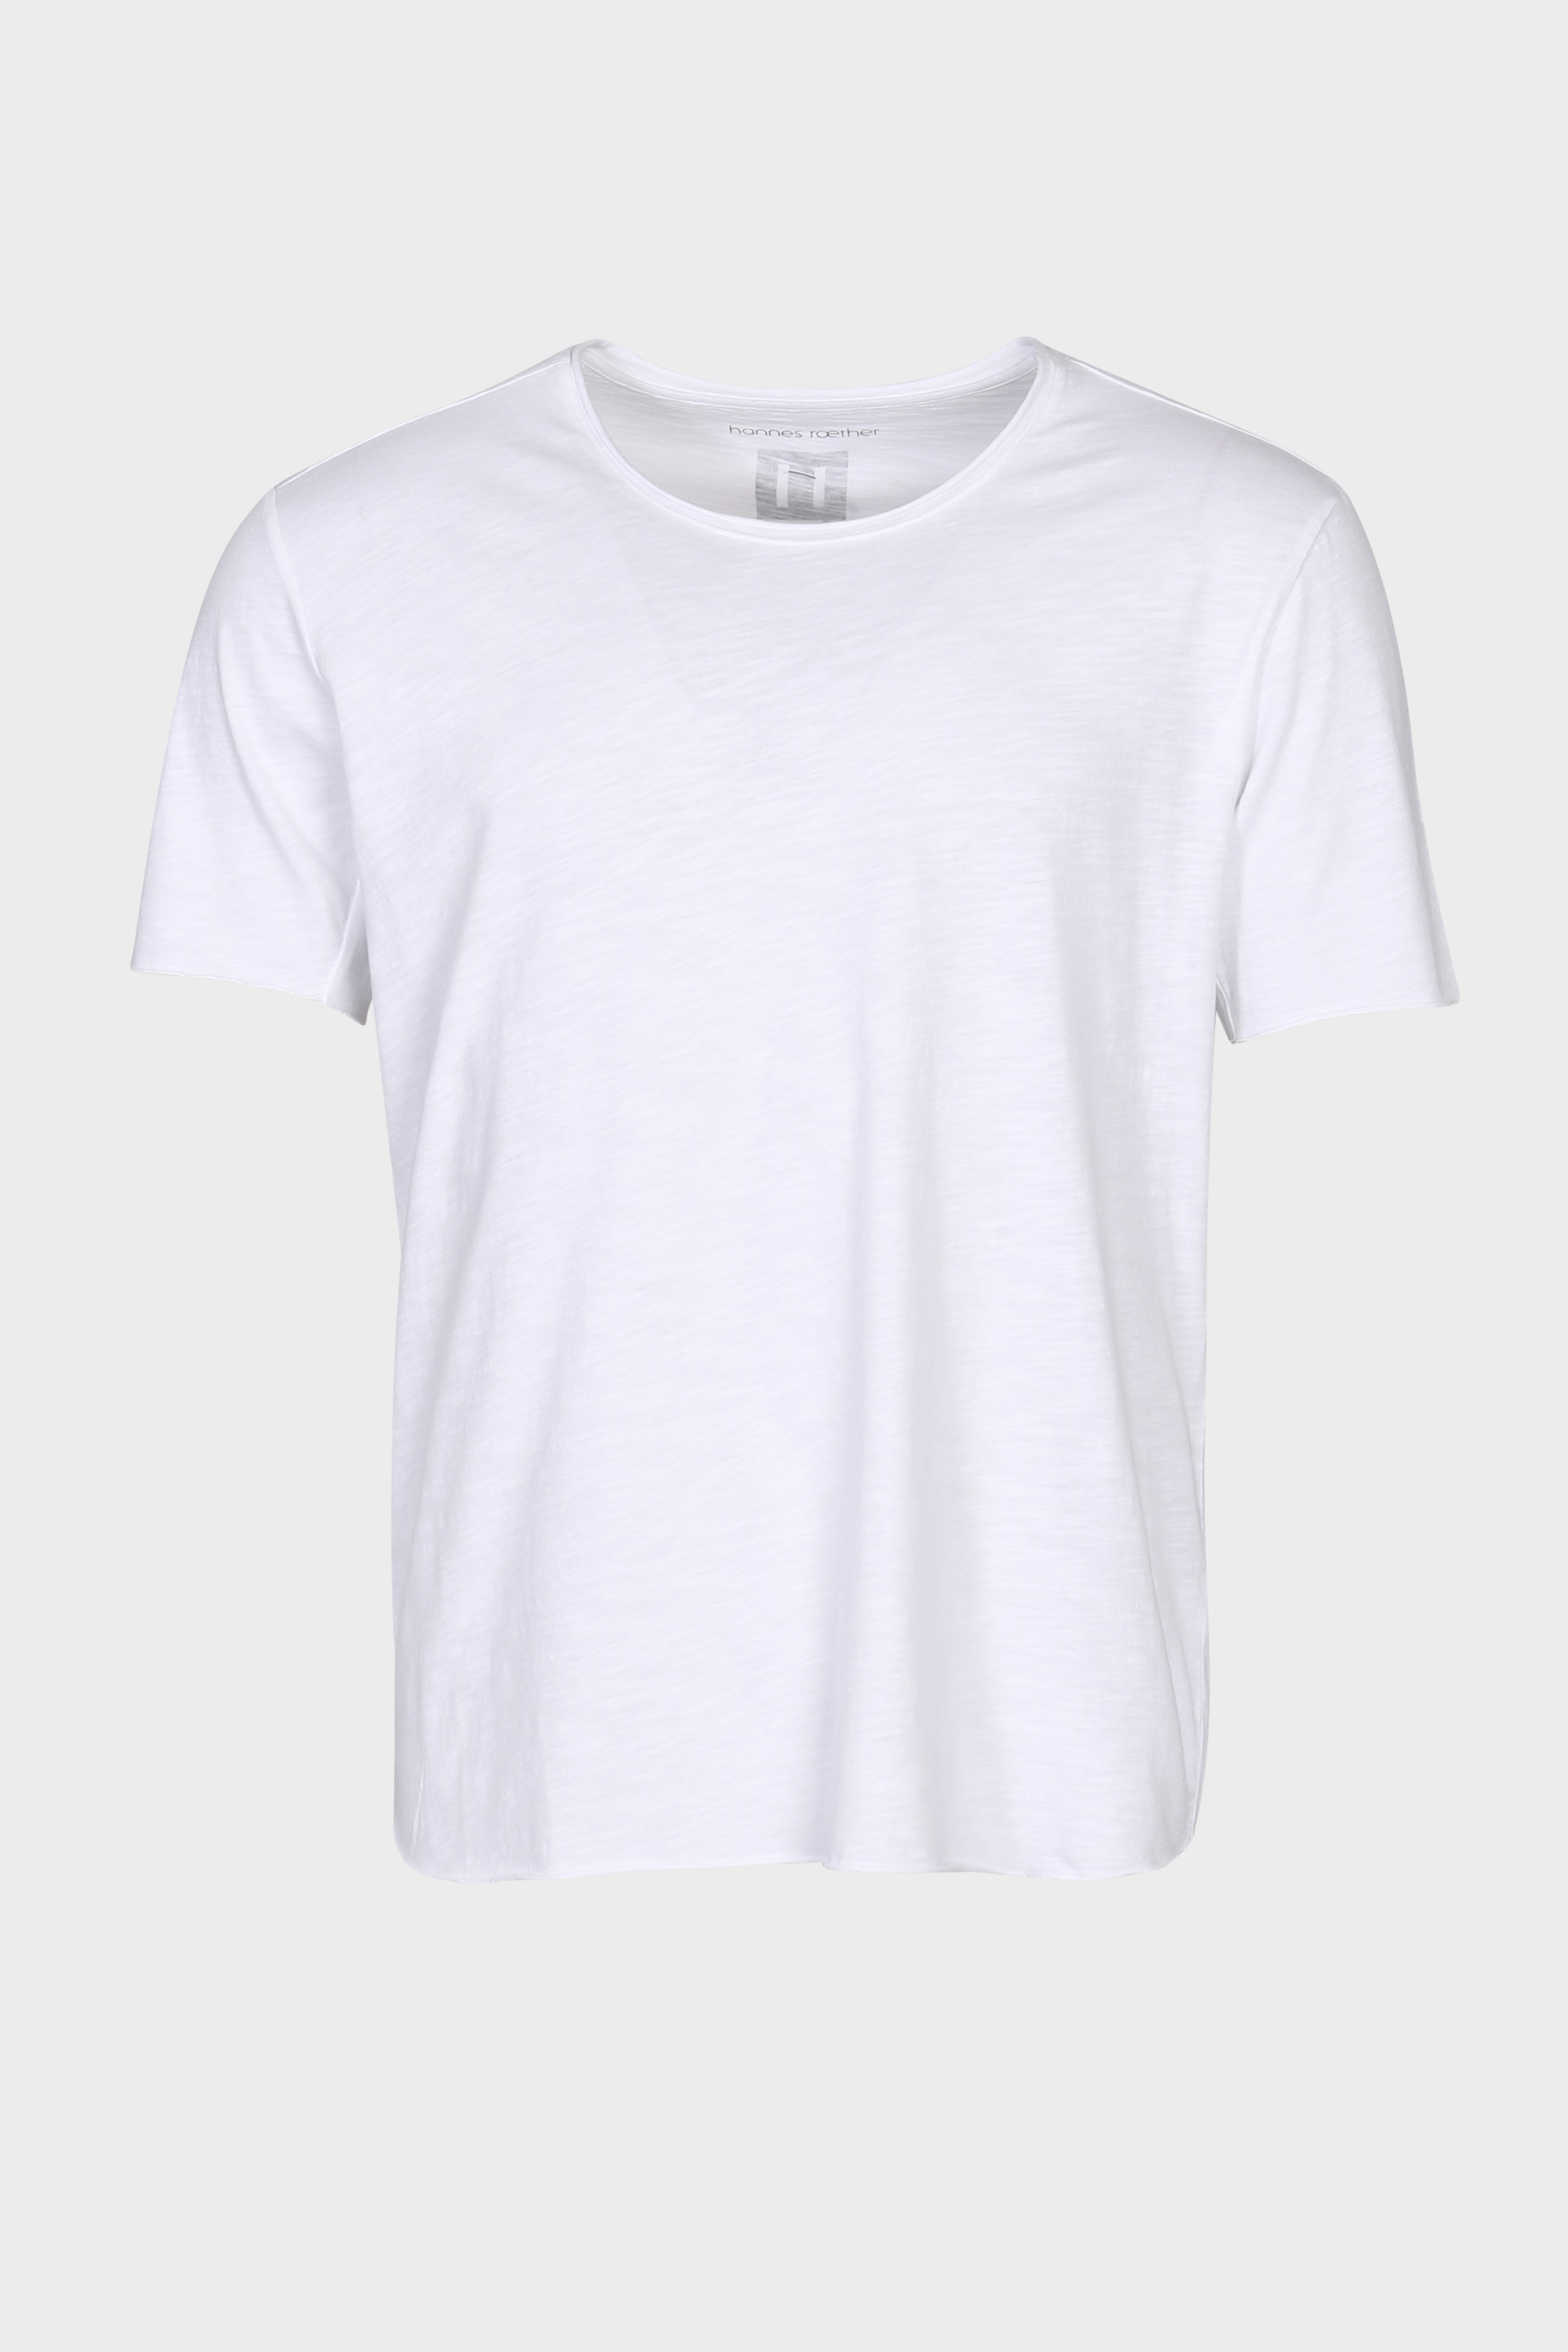 HANNES ROETHER Slub Jersey T-Shirt in White